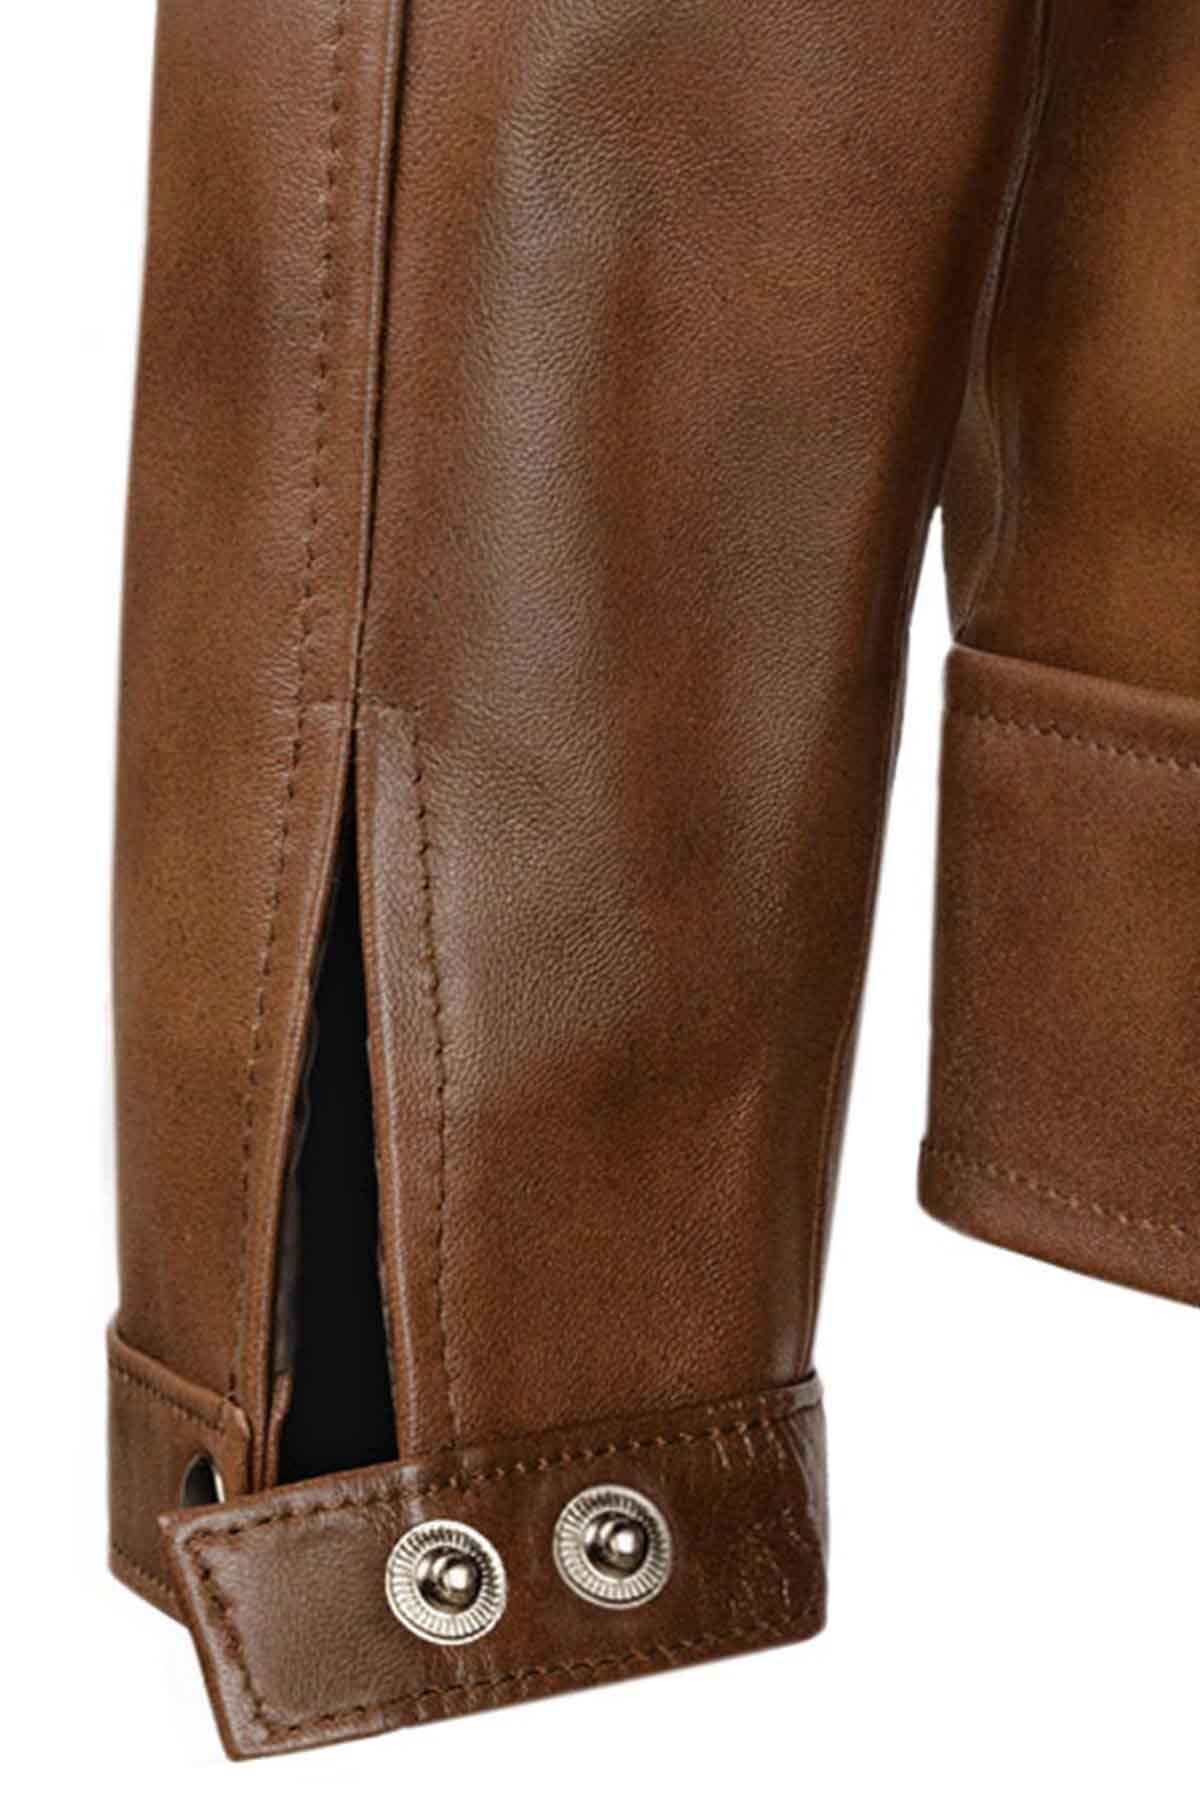 Epic Scott Eastwood Overdrive Leather Jacket For Men’s